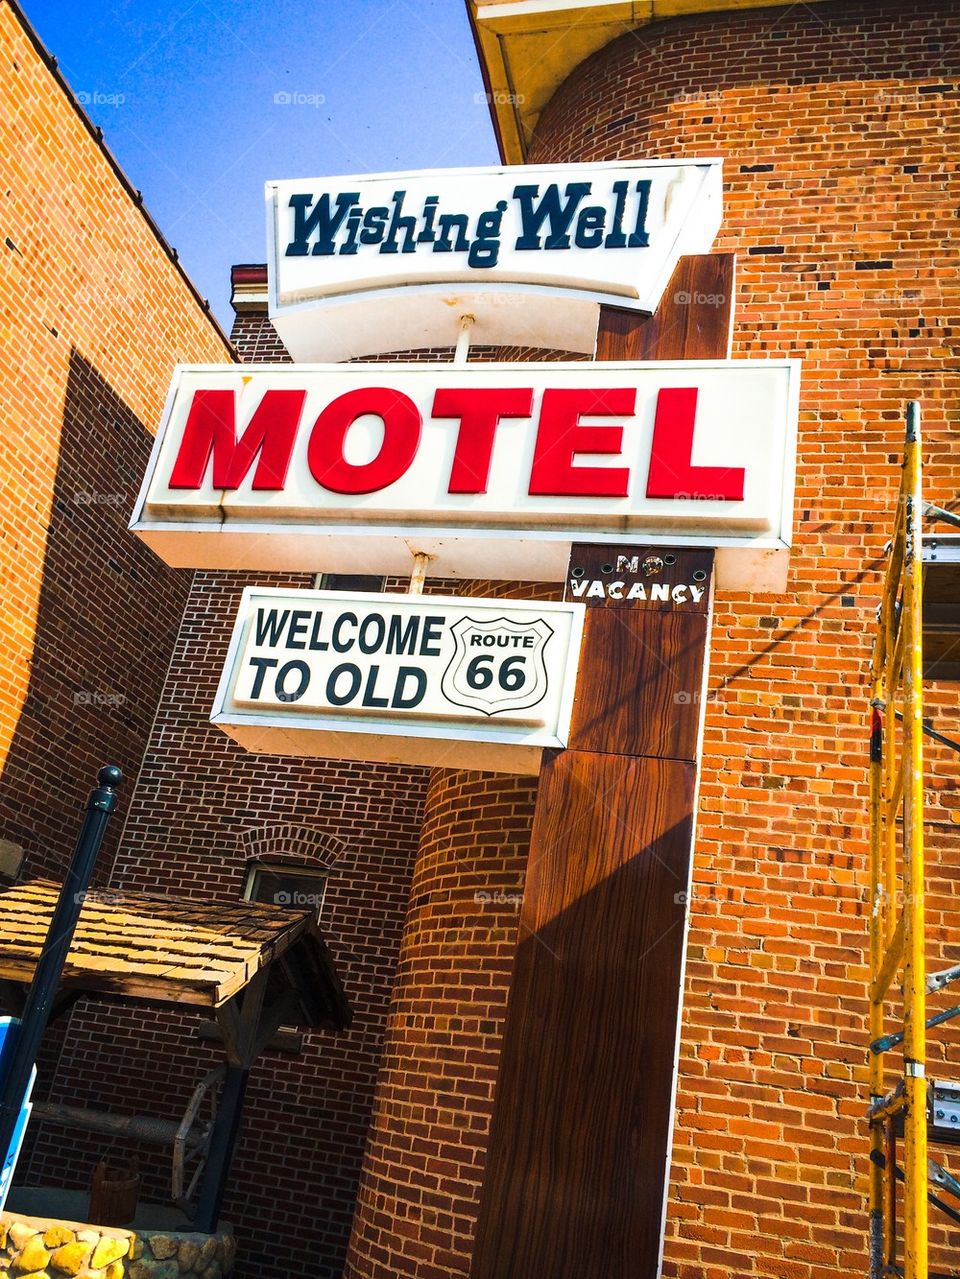 Wishing well motel sign